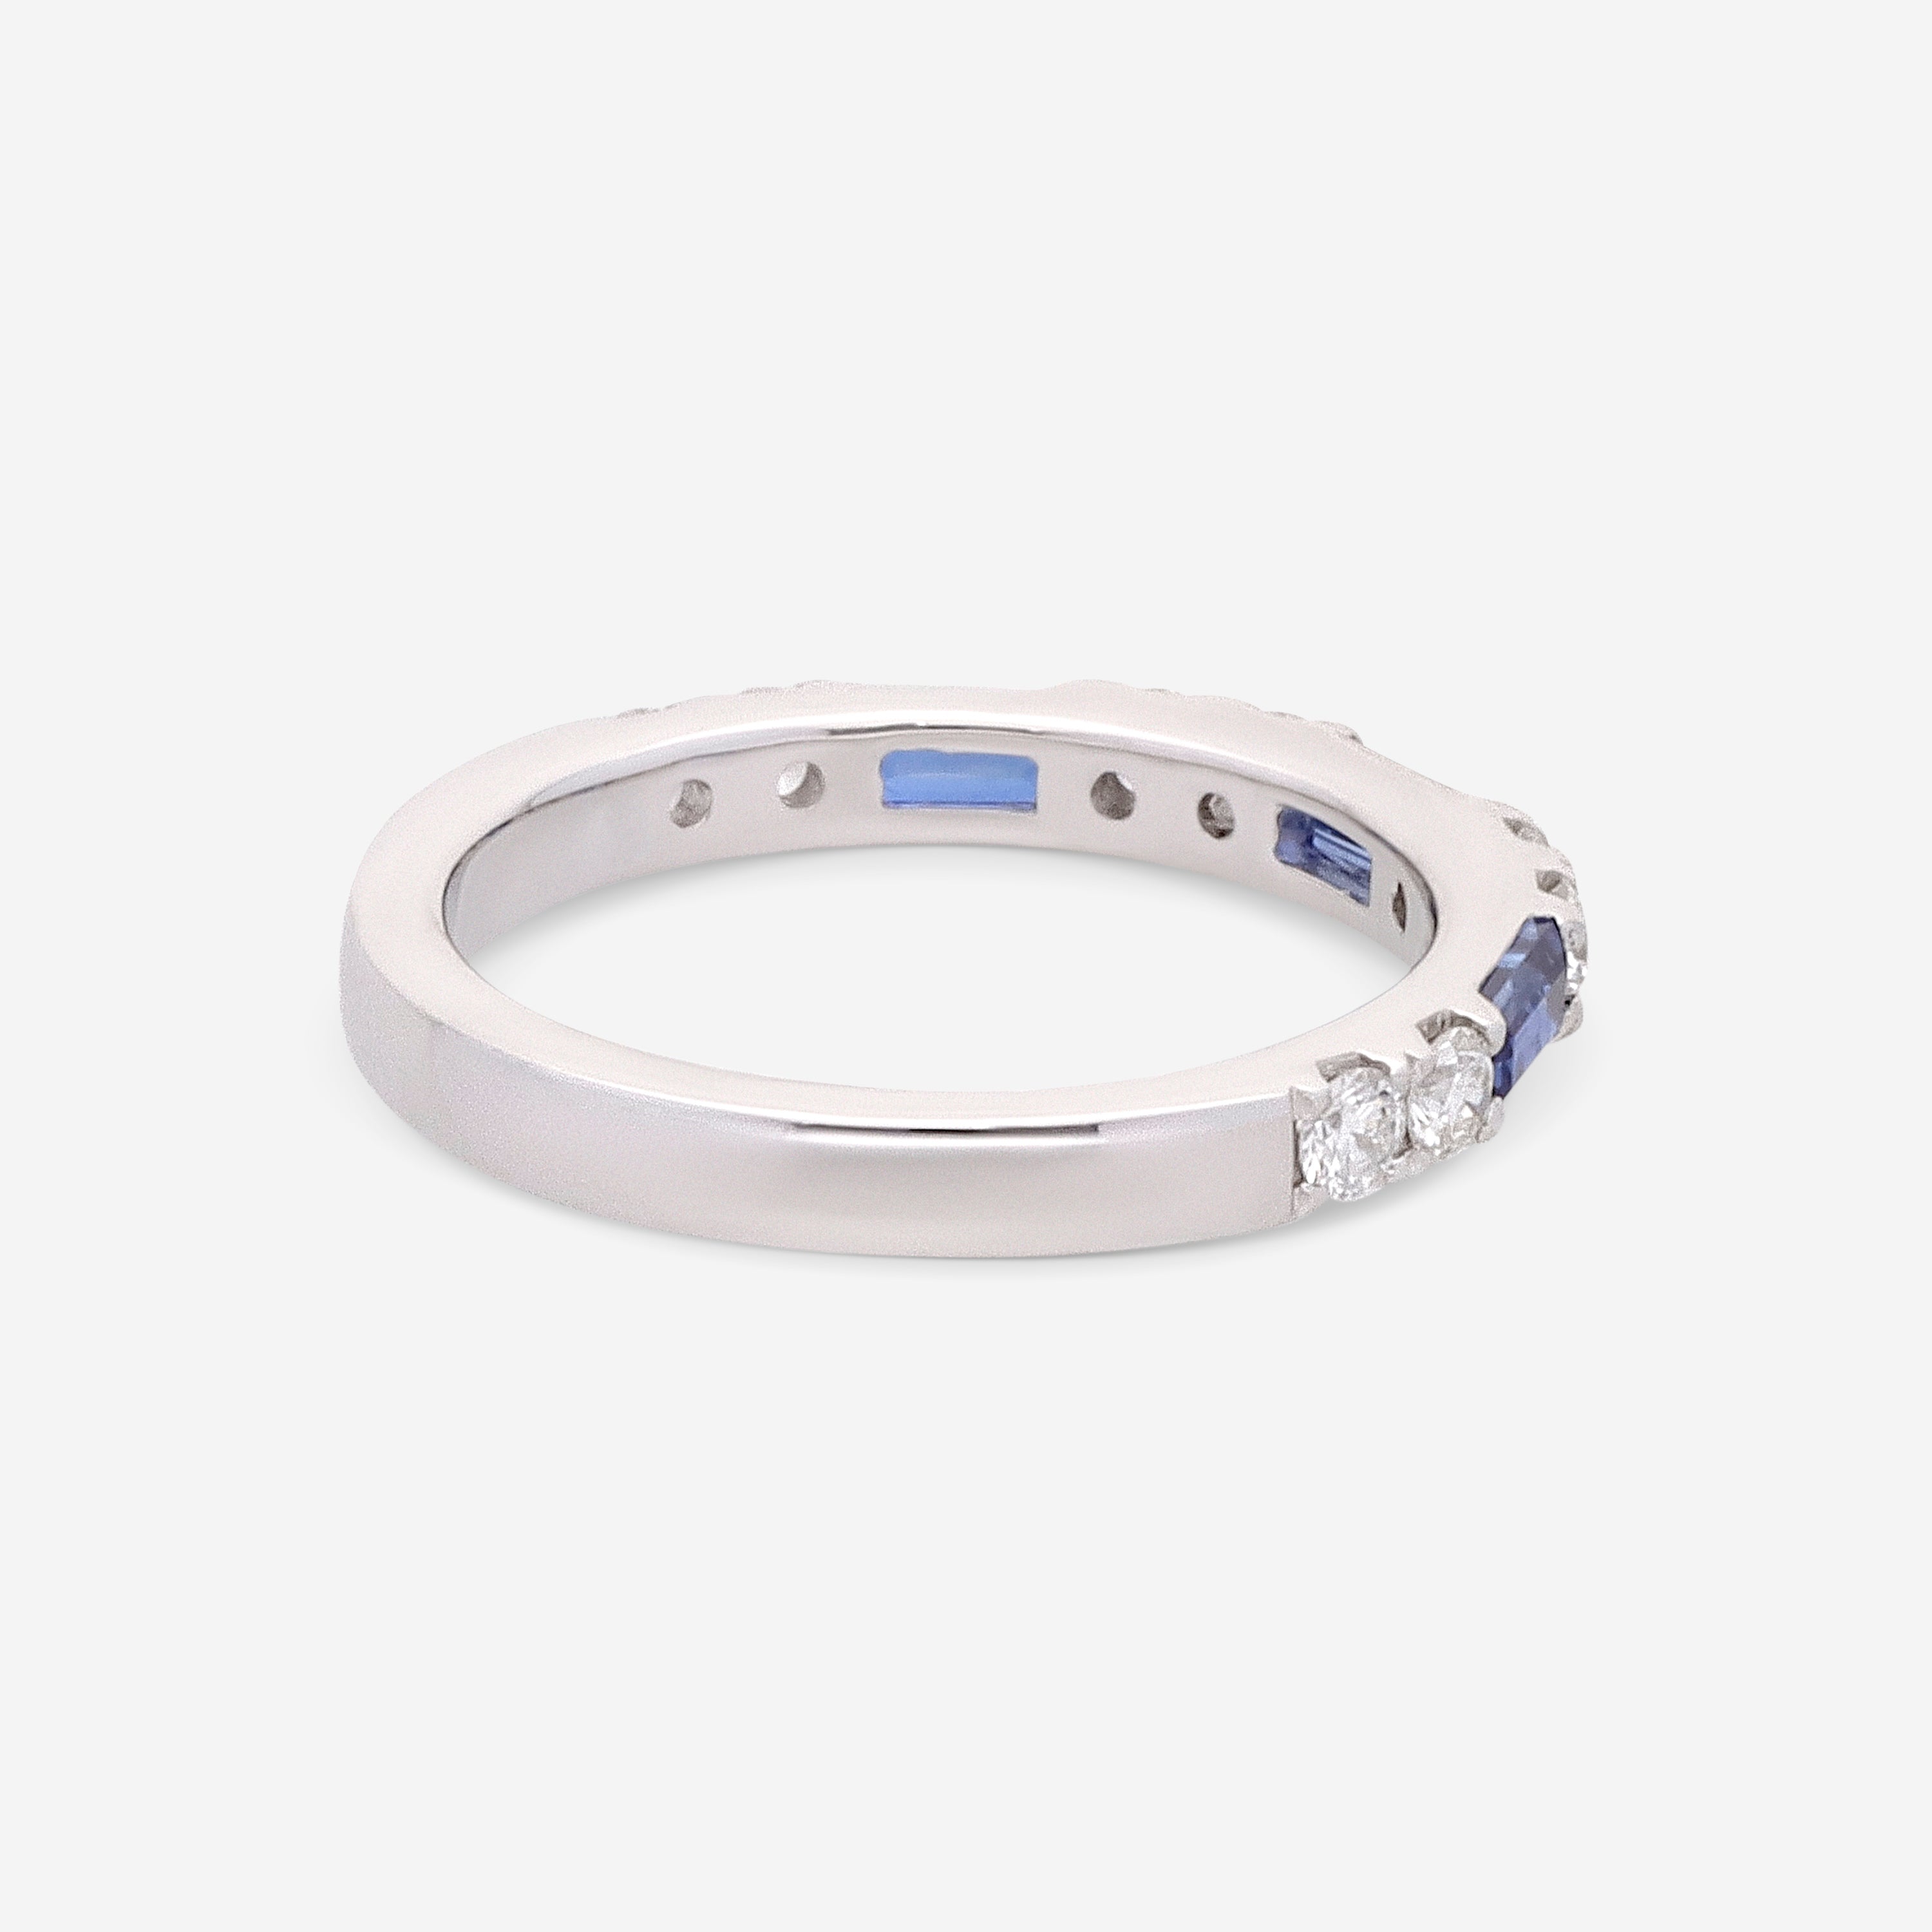 Ina Mar 14K White Gold Alternating Baguette Sapphire and Diamond Ring RG-085897-Sapp